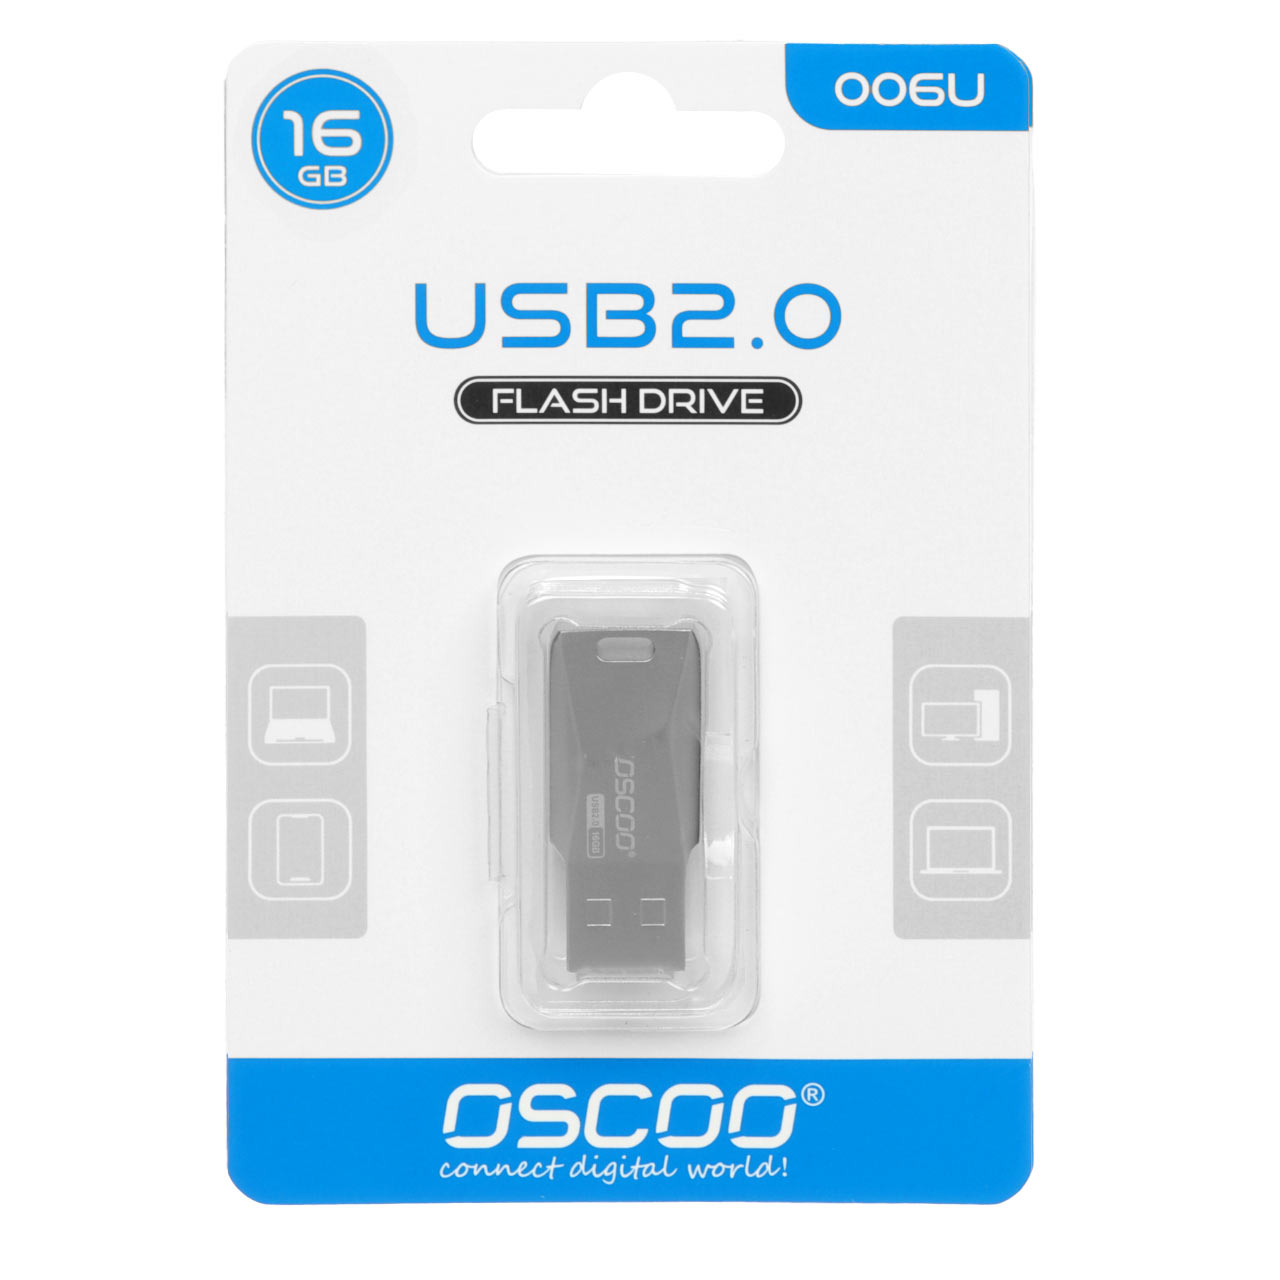 OSCOO 006U USB2.0 Flash Memory-16GB نقره ای (گارانتی سورین